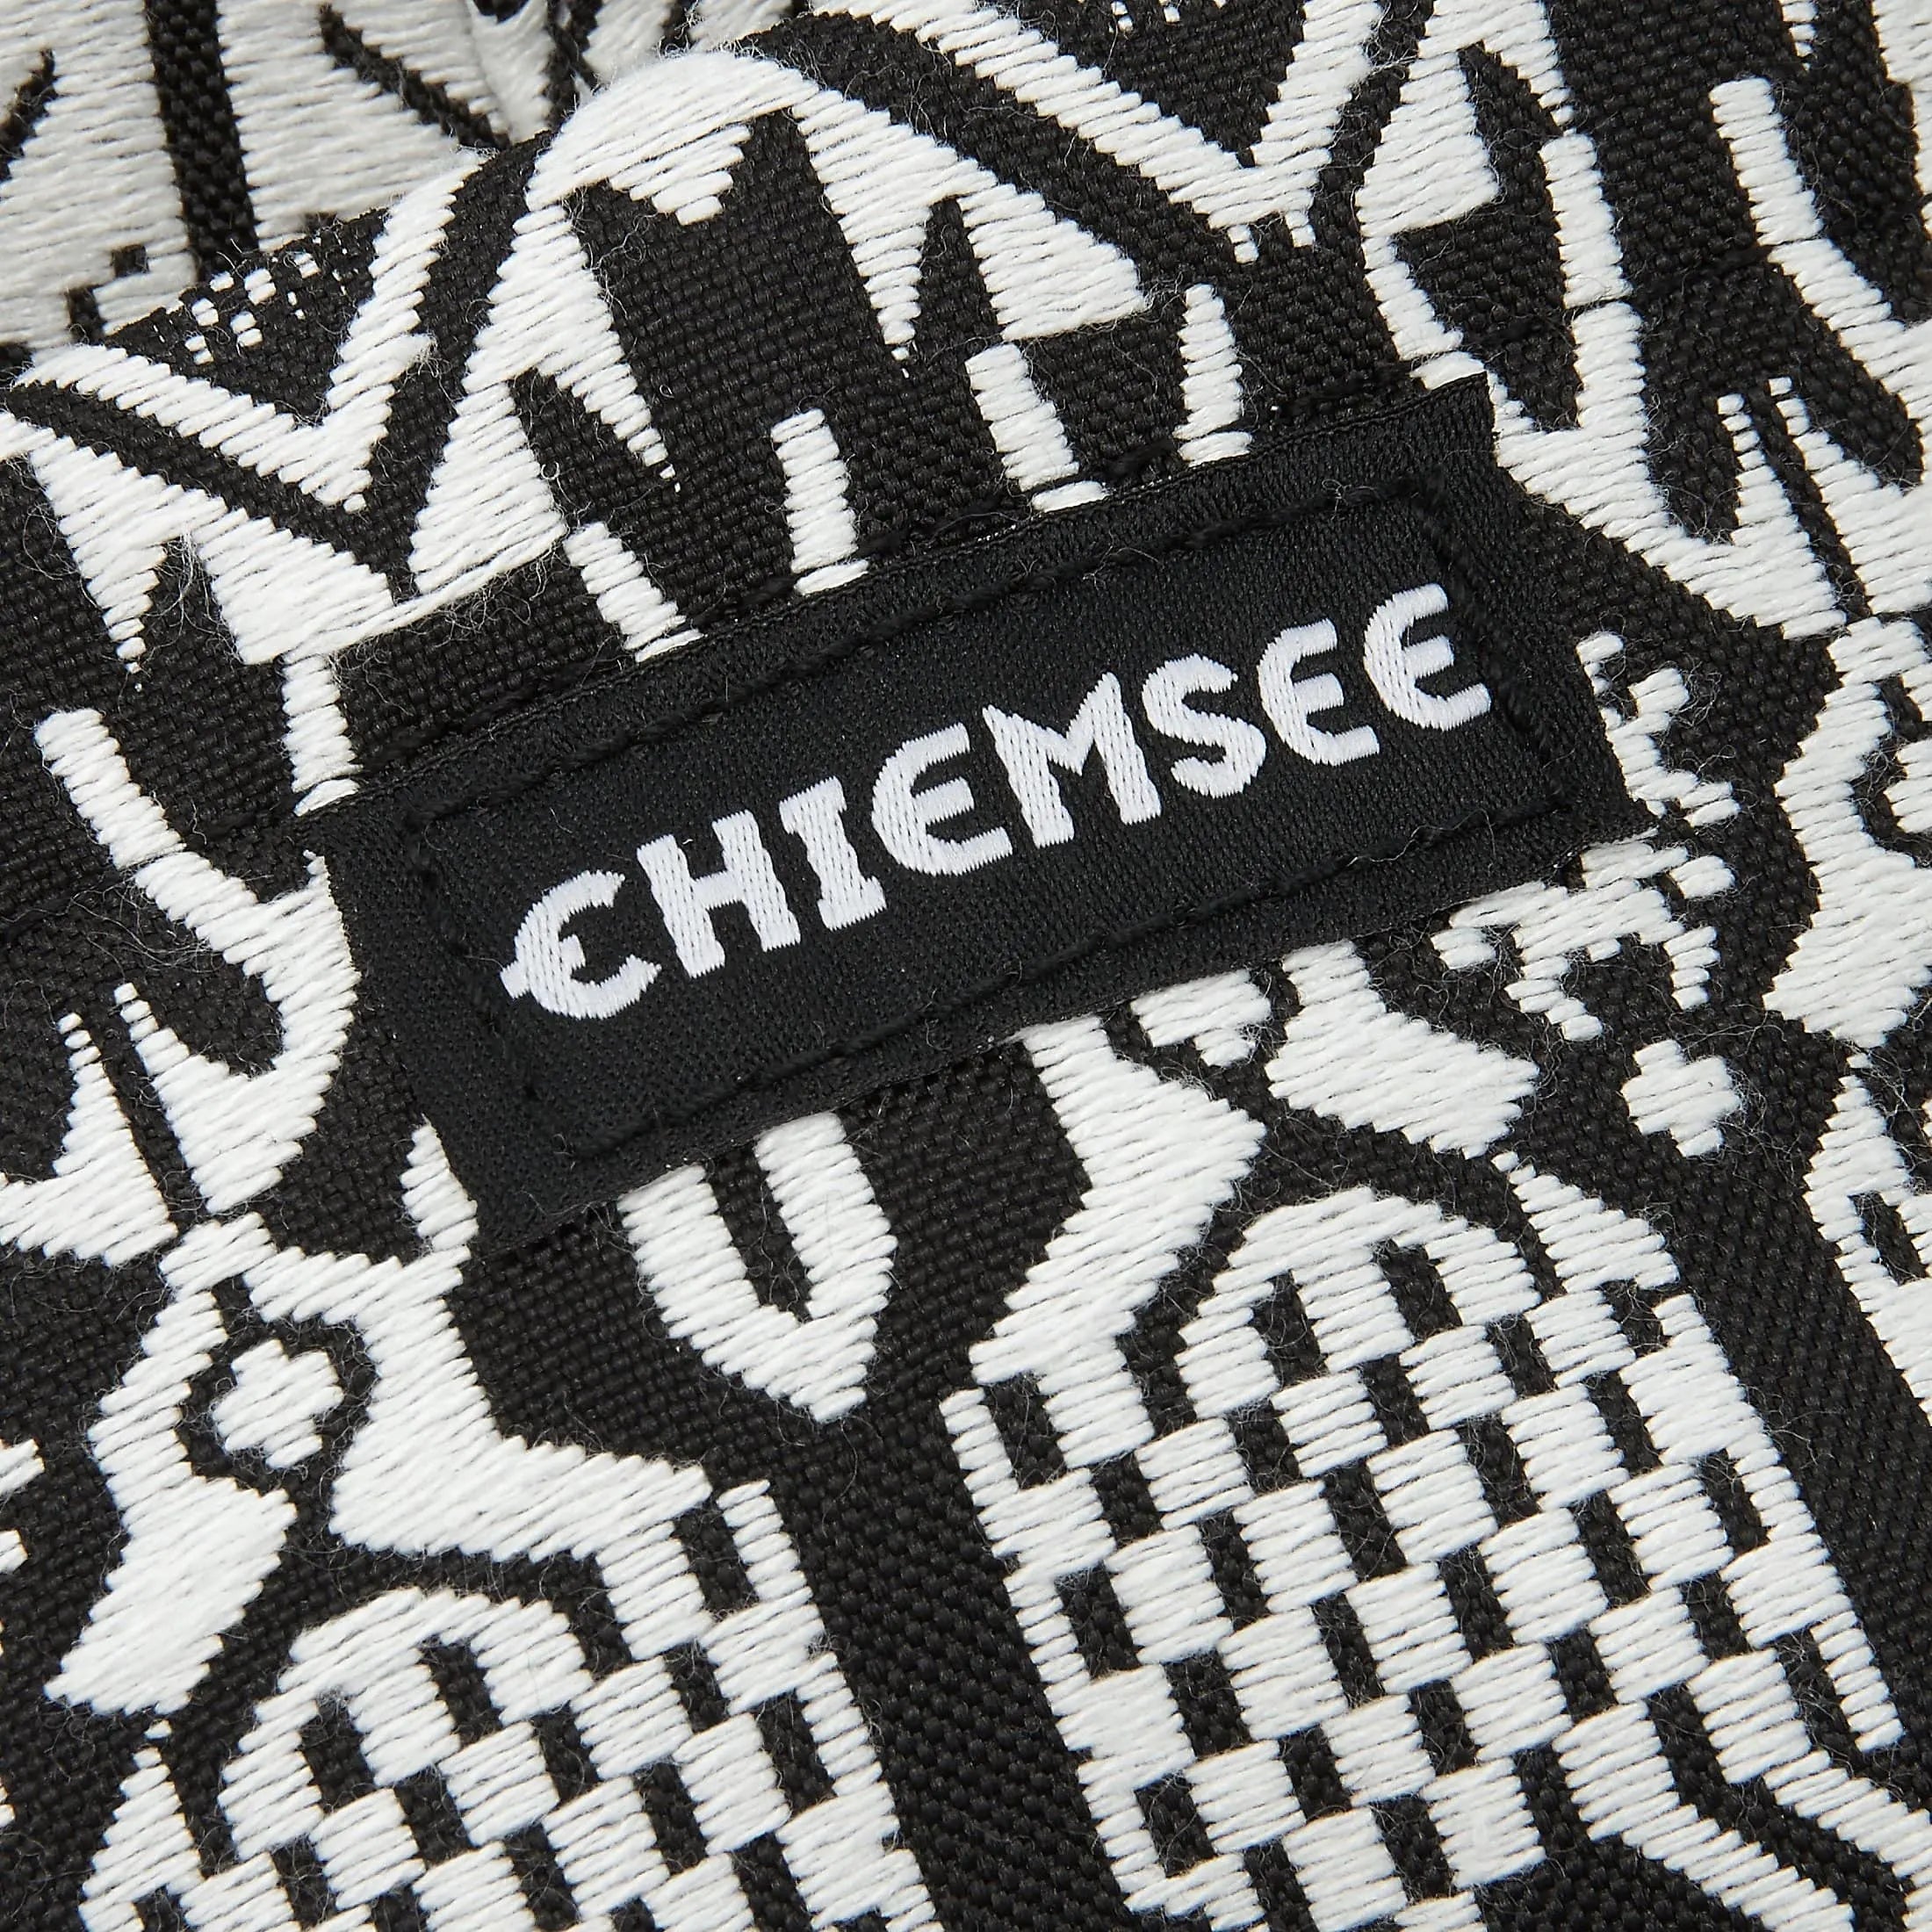 Chiemsee Sports & Travel Bags Black & White Rucksack 41 cm - deep black